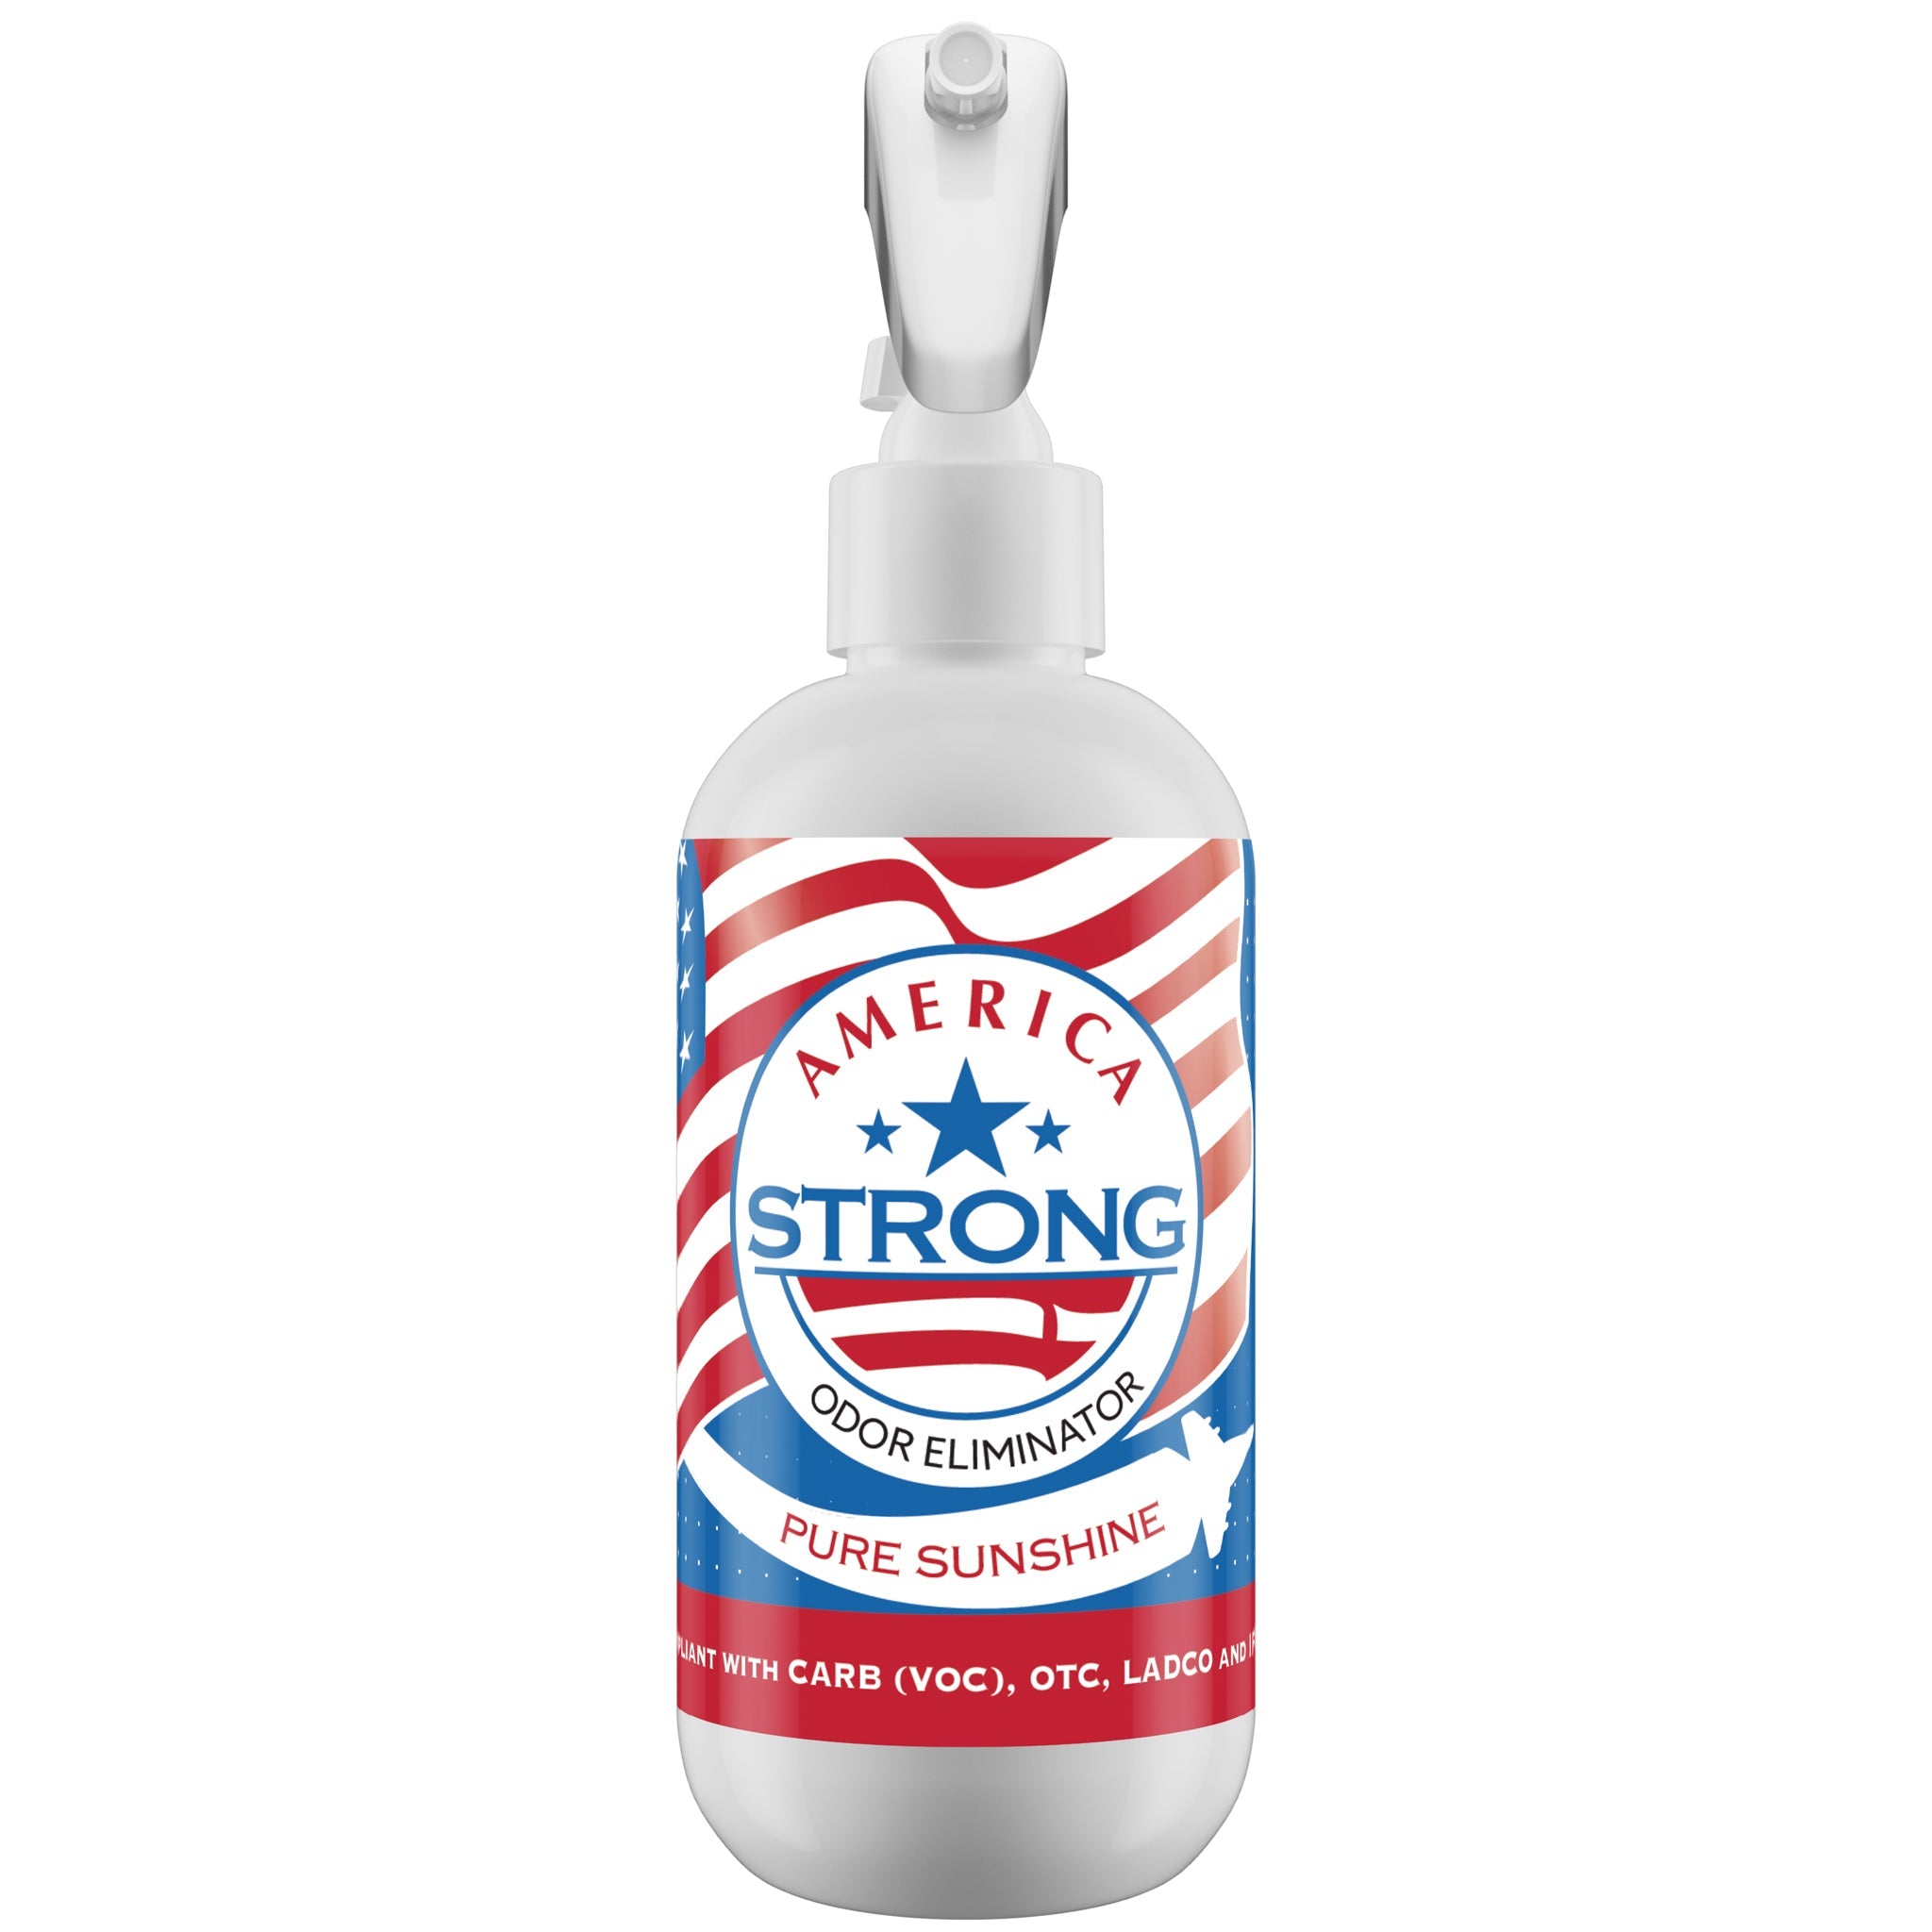 America Strong Odor Eliminator - Pure Sunshine Scent Size: 8.0oz